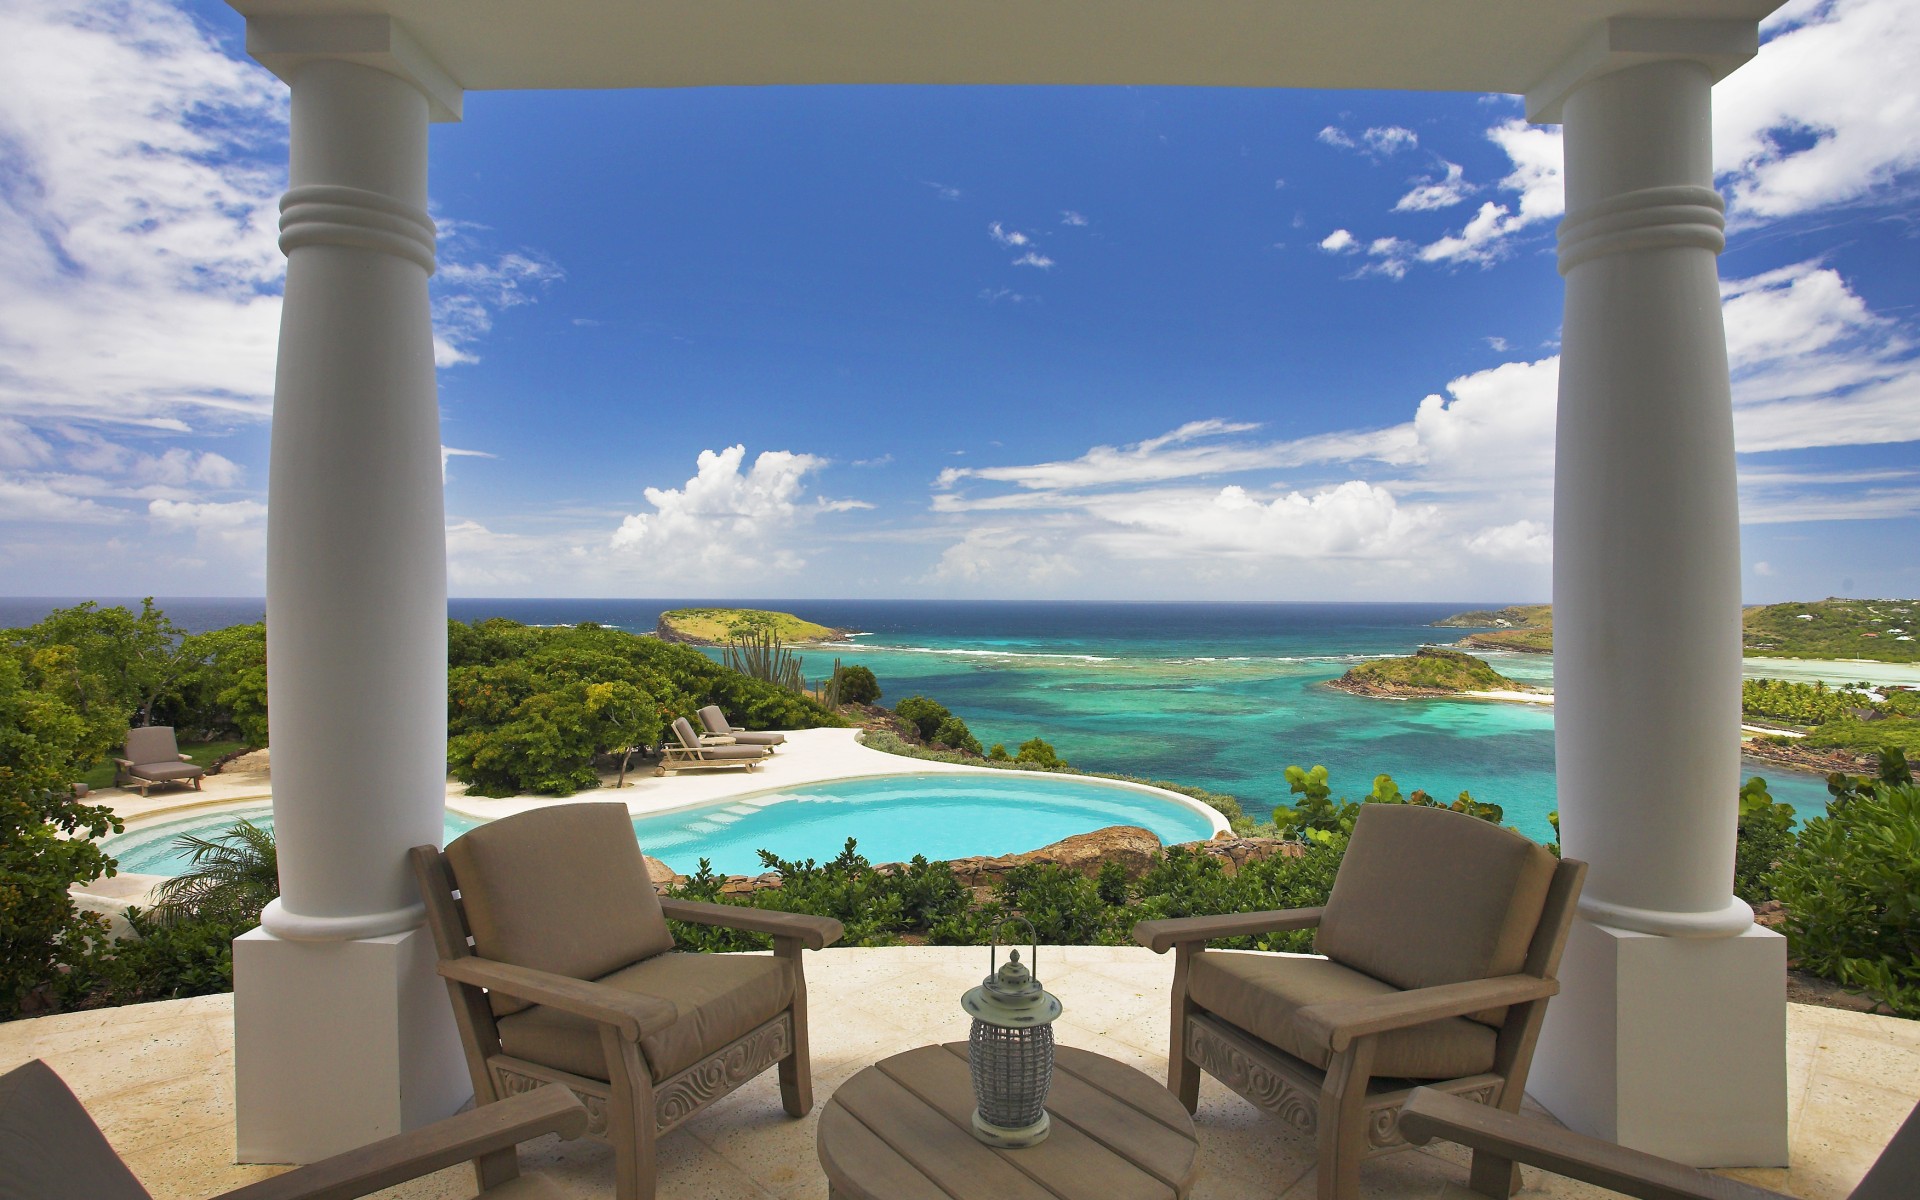 terrace, Columns, Resort, Vacation, Interior, Design, Tropical, Ocean, Sea, Beaches, Pool, Sky, Clouds Wallpaper